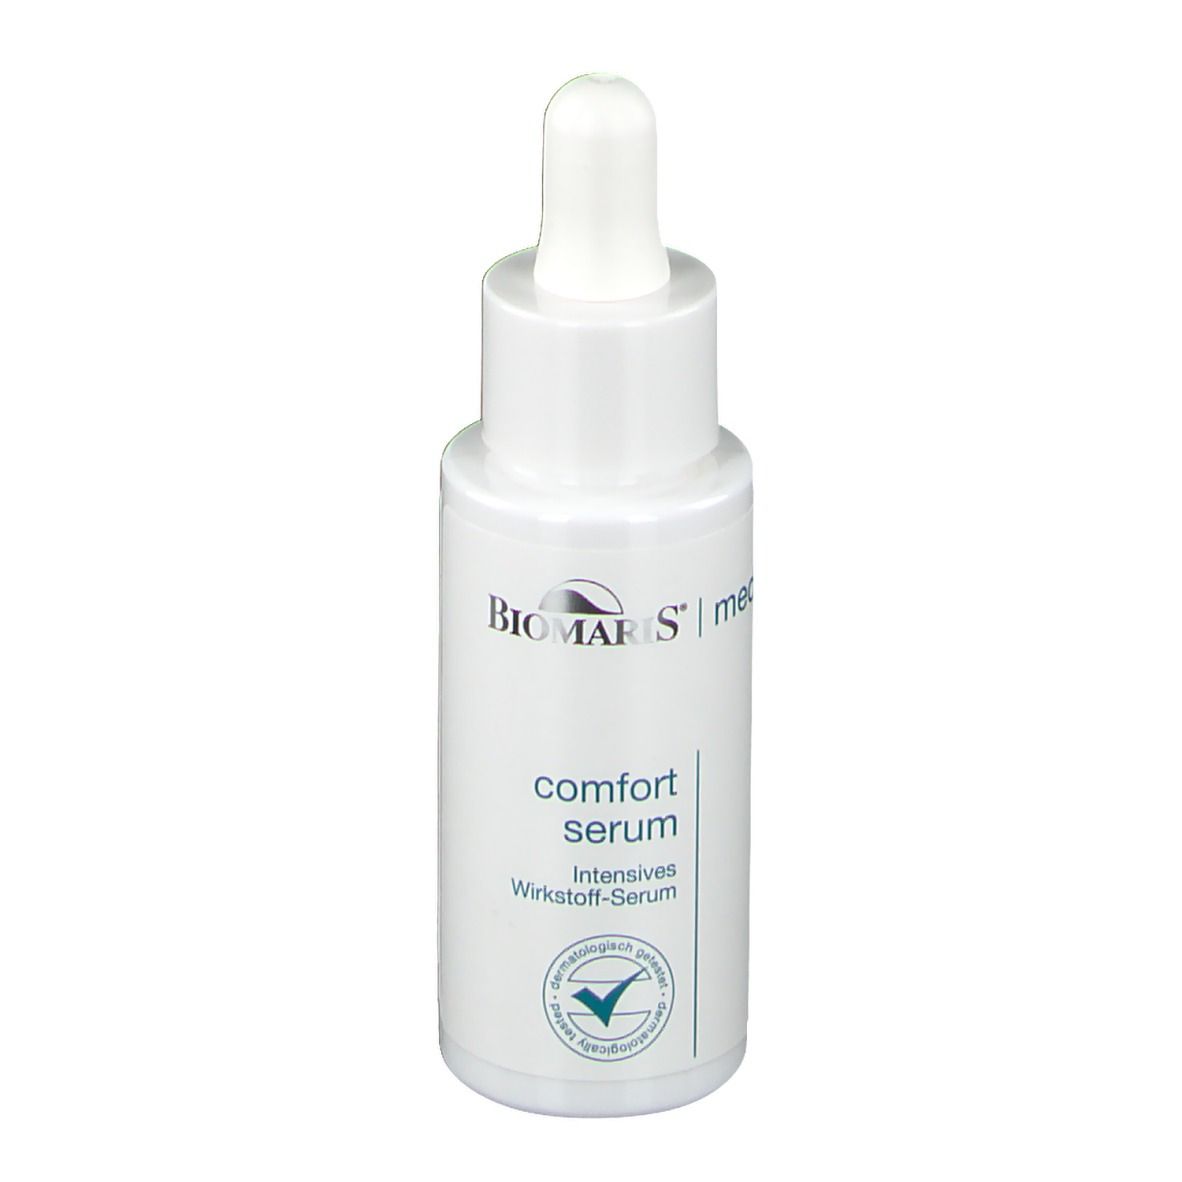 BIOMARIS® comfort serum med Emulsion